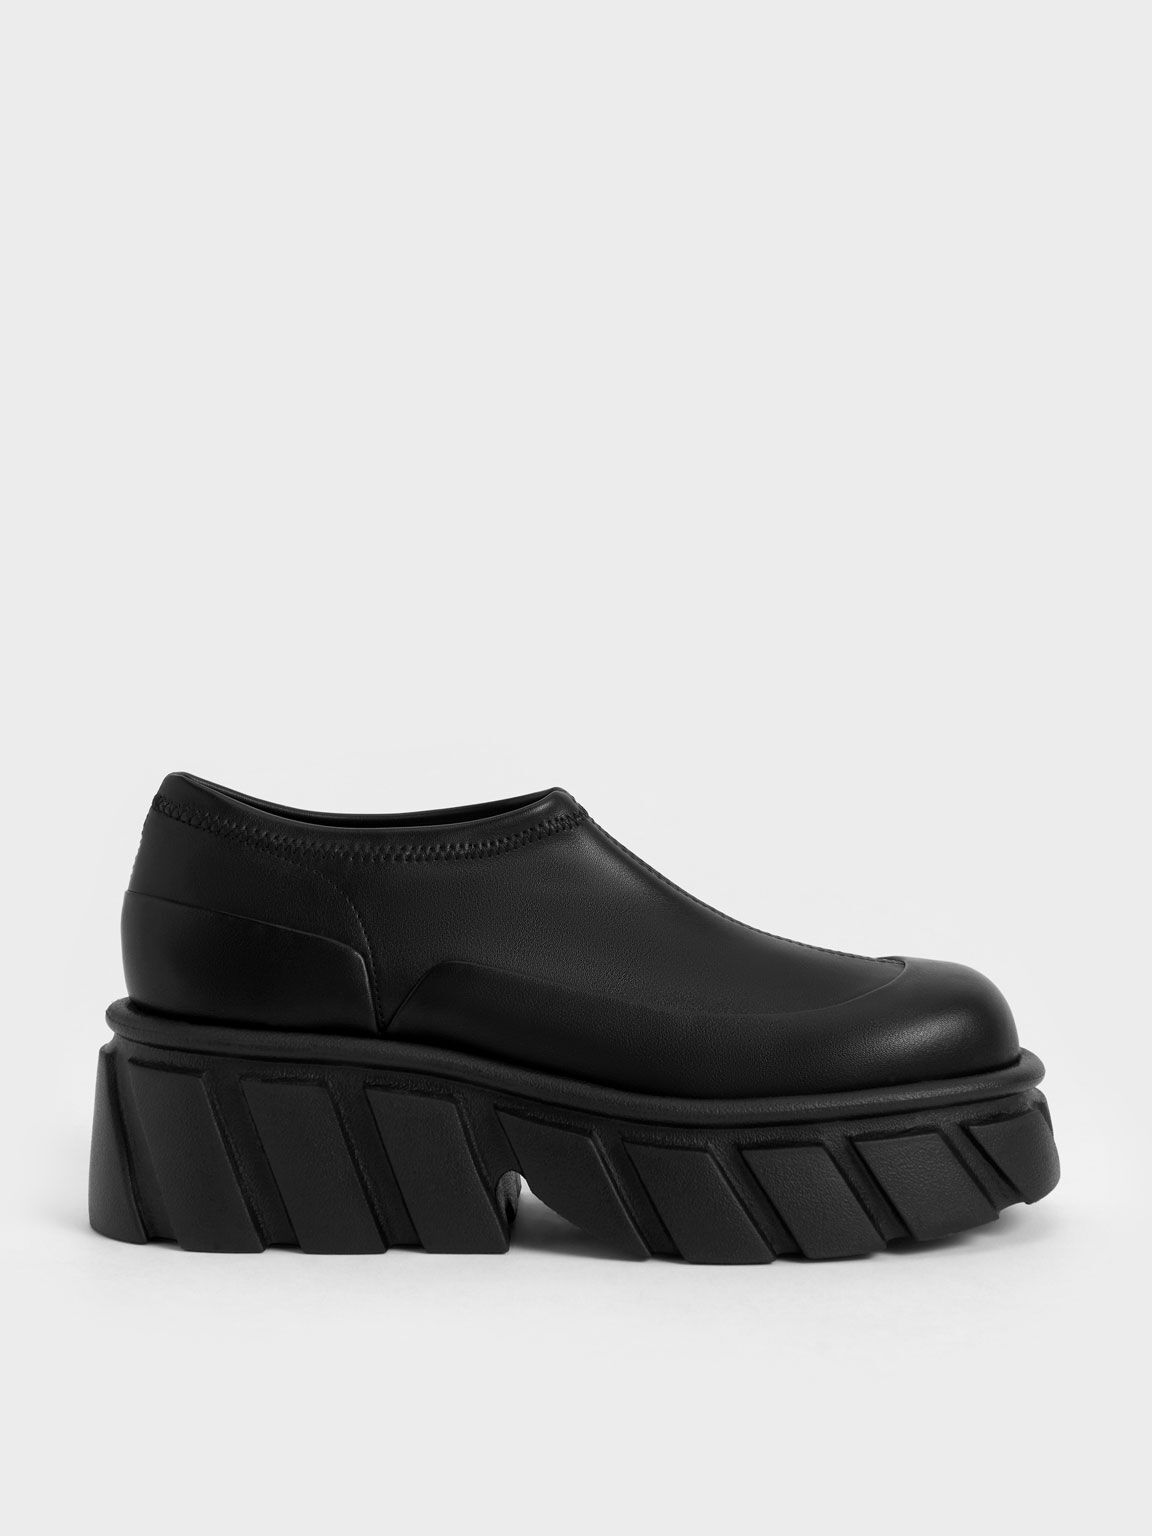 Aberdeen 厚底休閒鞋, 黑色, hi-res